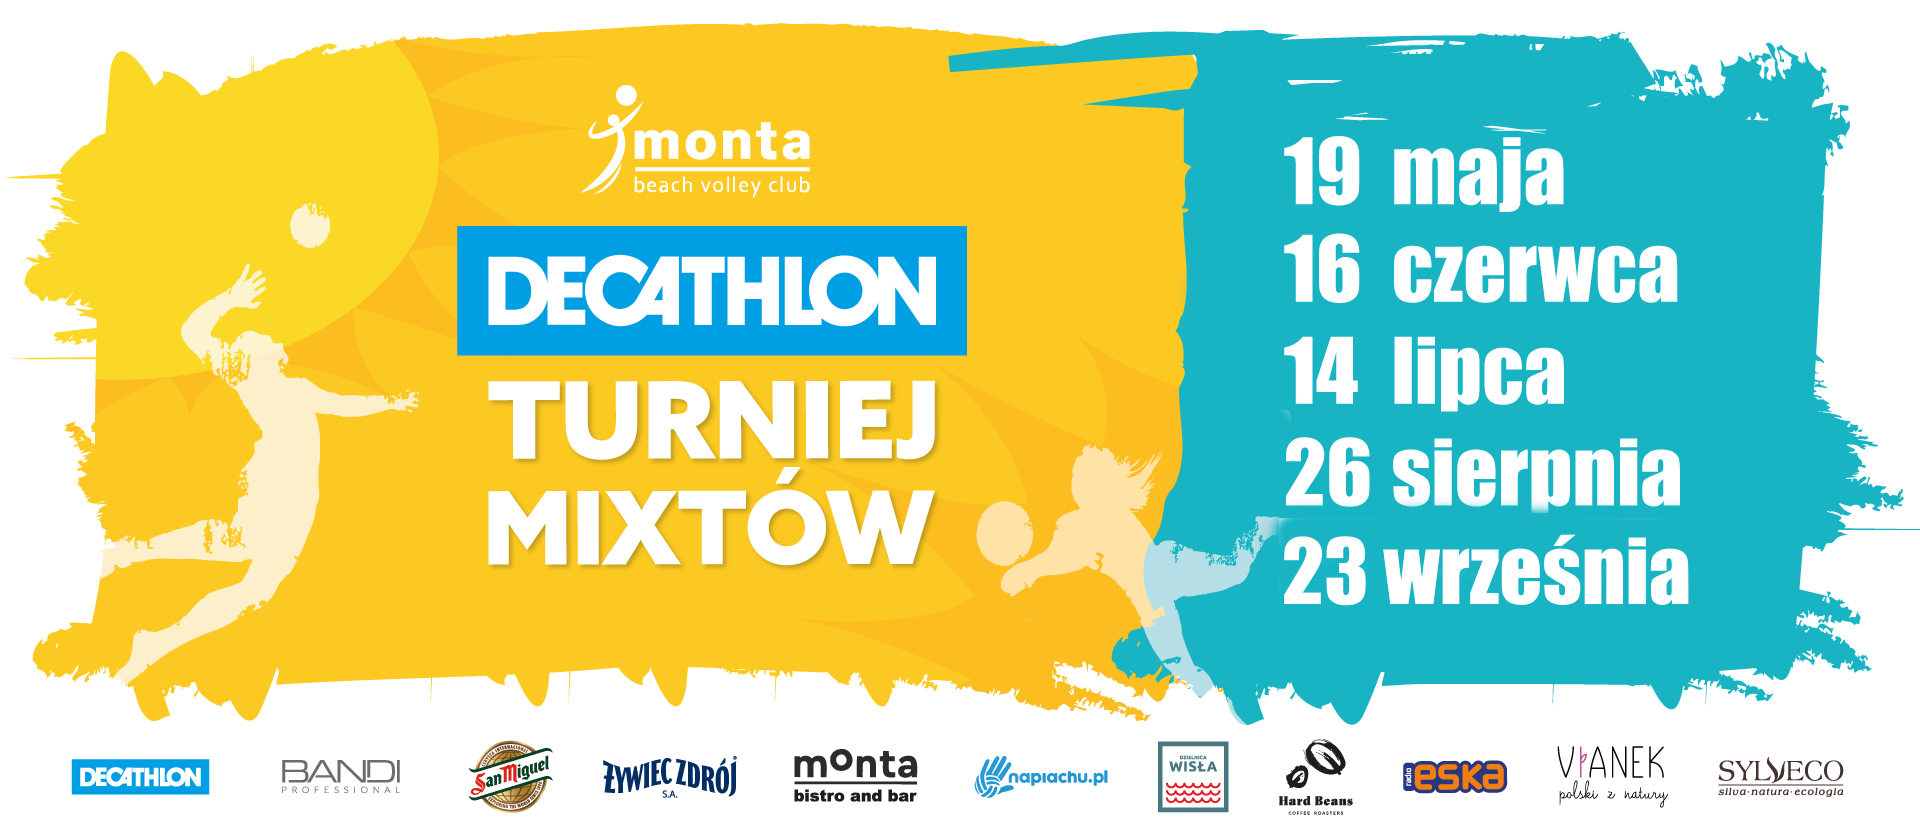 Decathlon Turniej Mixtów 2018